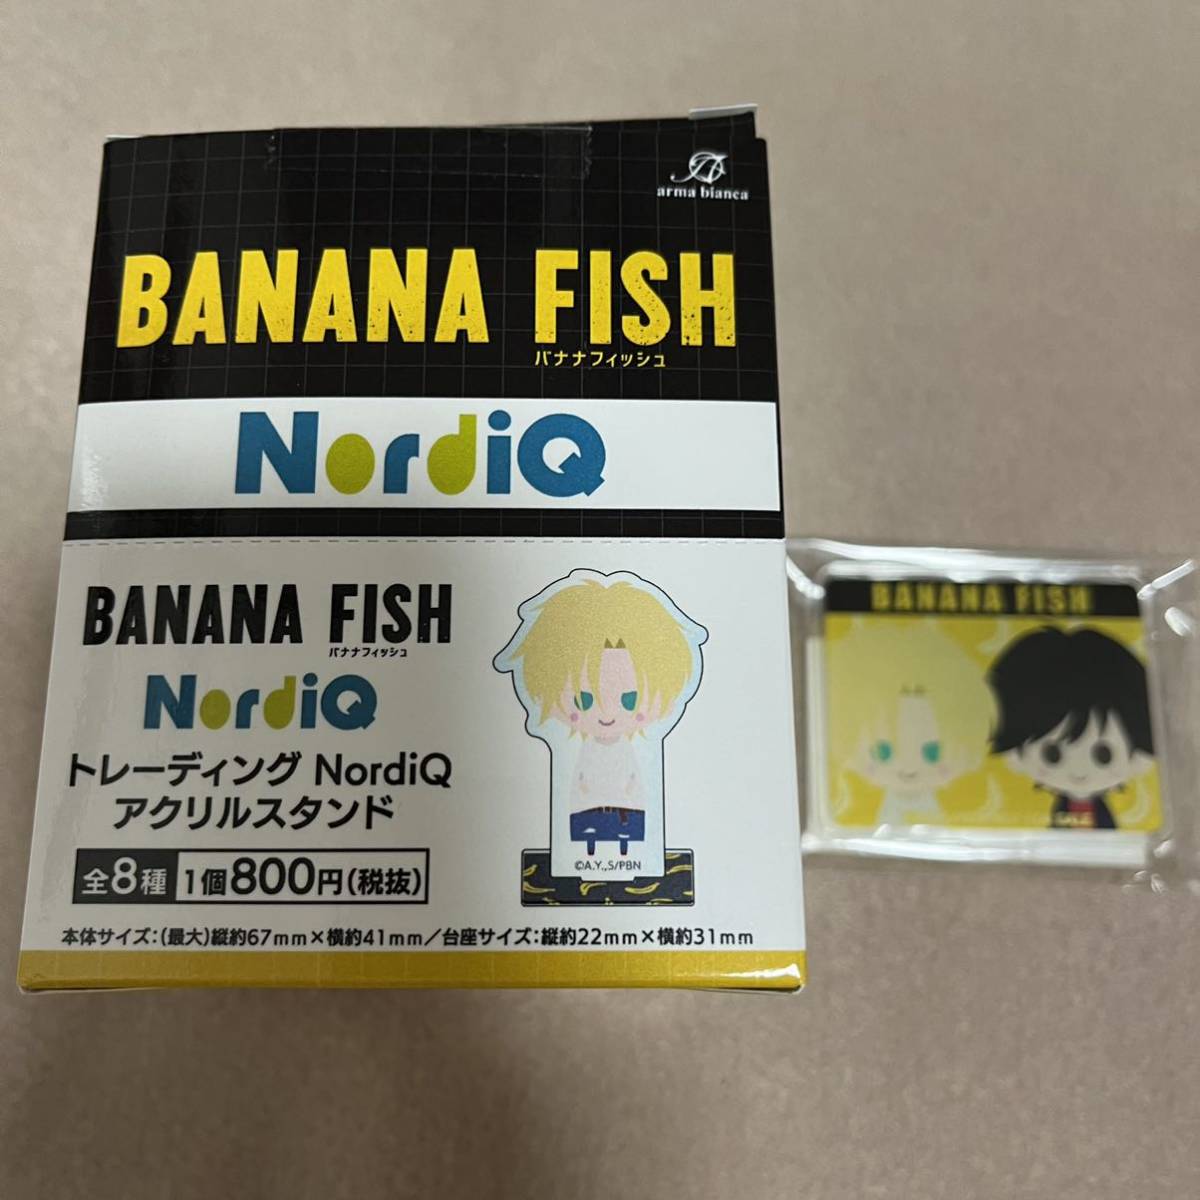 BANANA FISH アクリルスタンド 限定購入特典 NordiQ 新品未使用 バナナフィッシュ - ipwars.com